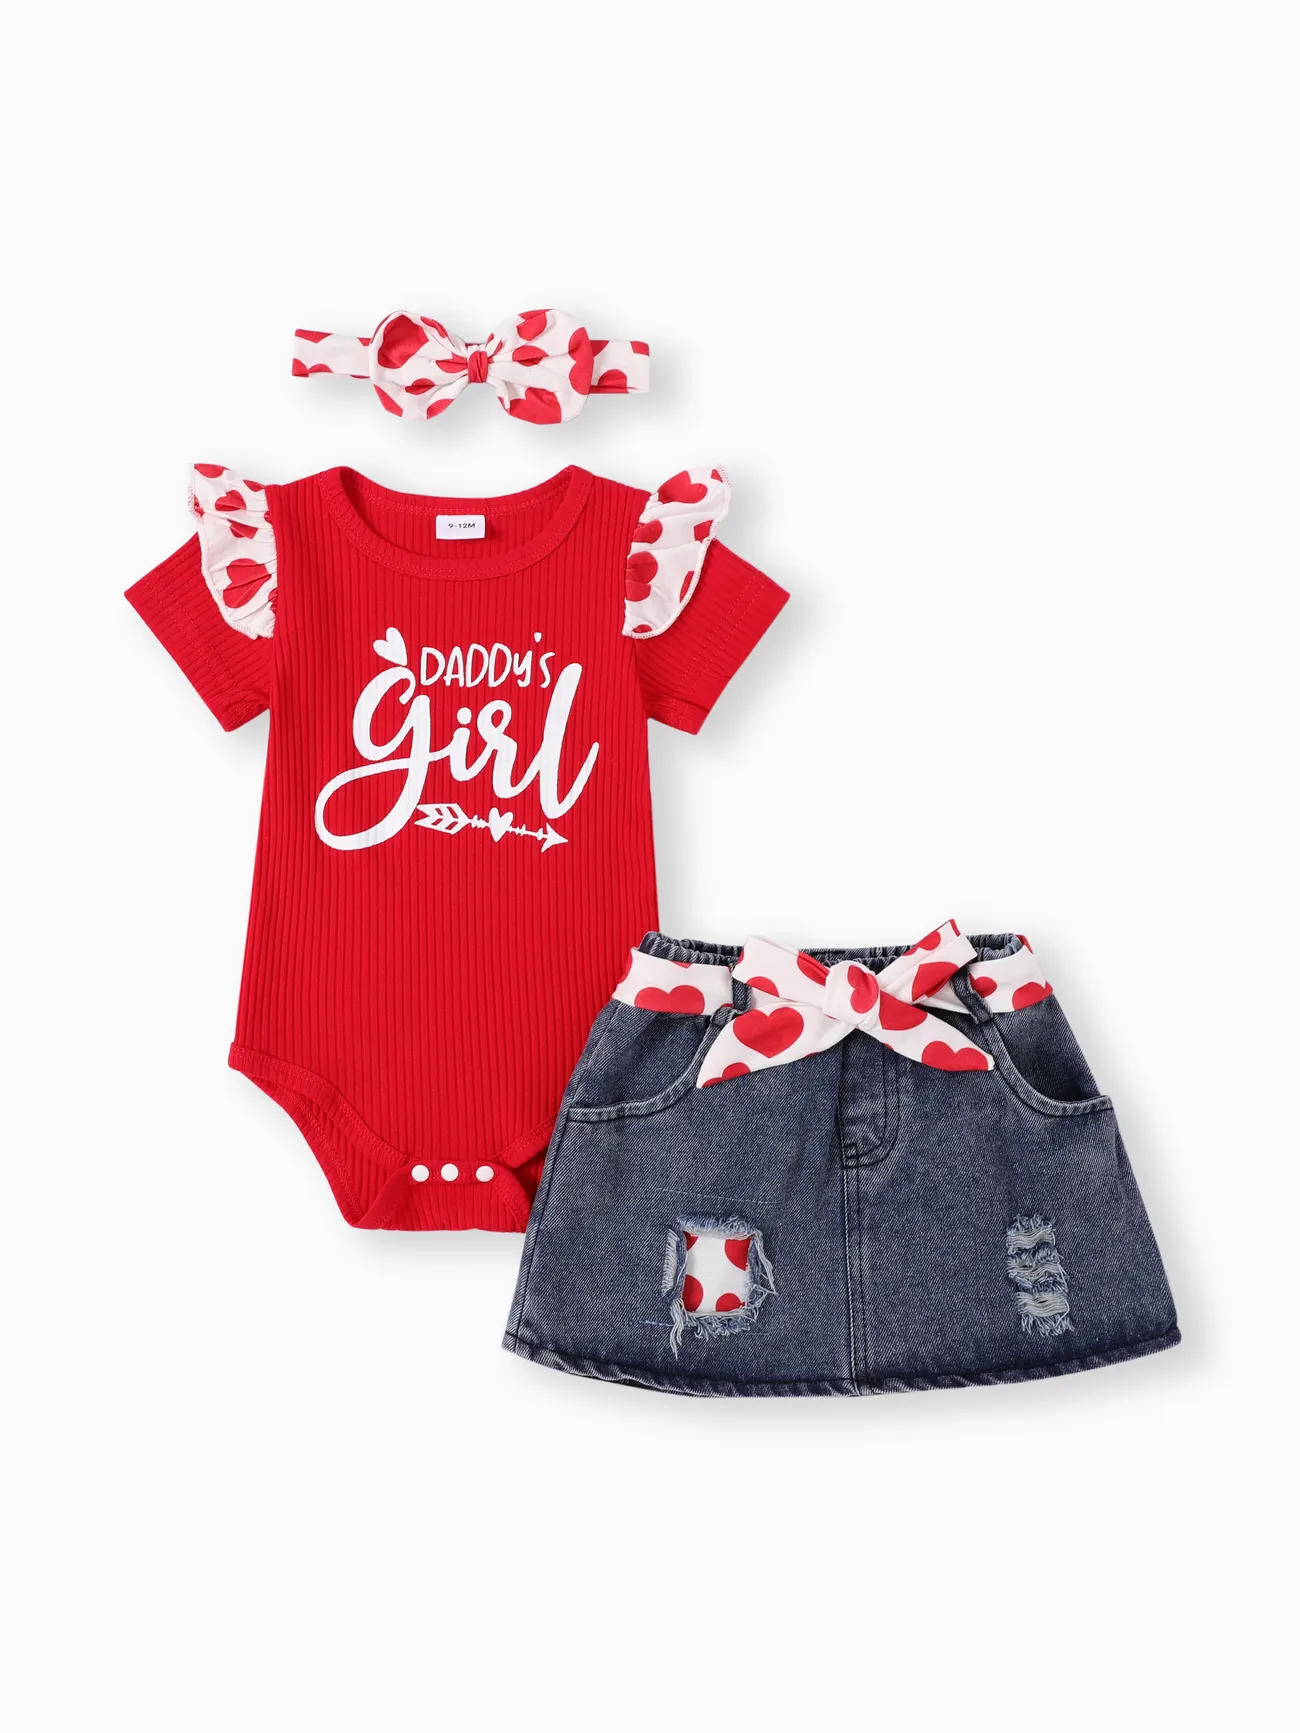 Sweet Cotton 2pcs Flutter Sleeve Suit-Dress for Baby Girl - Letter Pattern Red big image 1